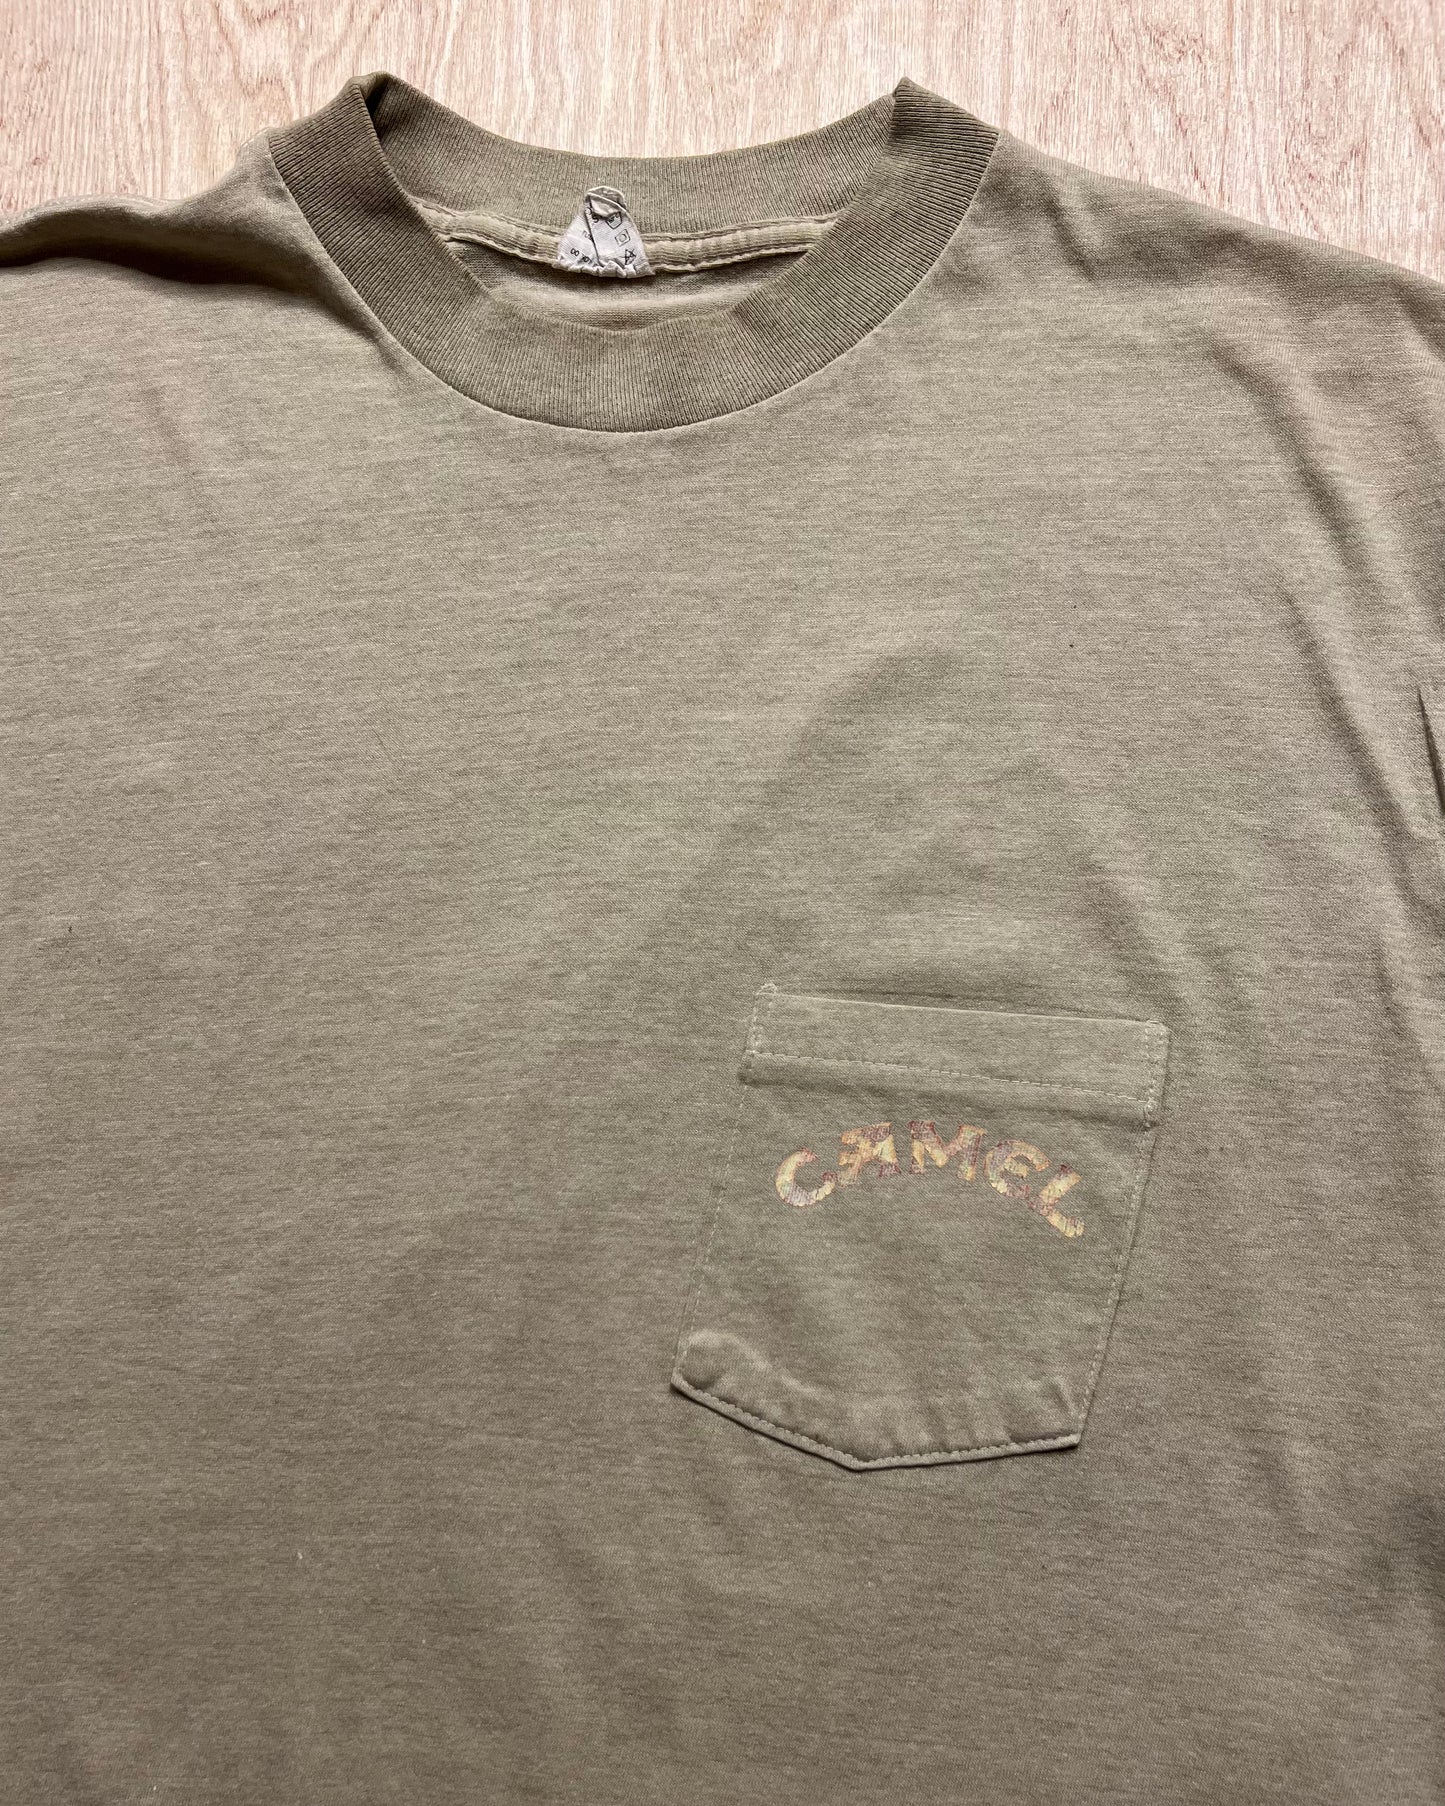 1992 Joe Camel Single Stitch Camouflage Pocket T-Shirt